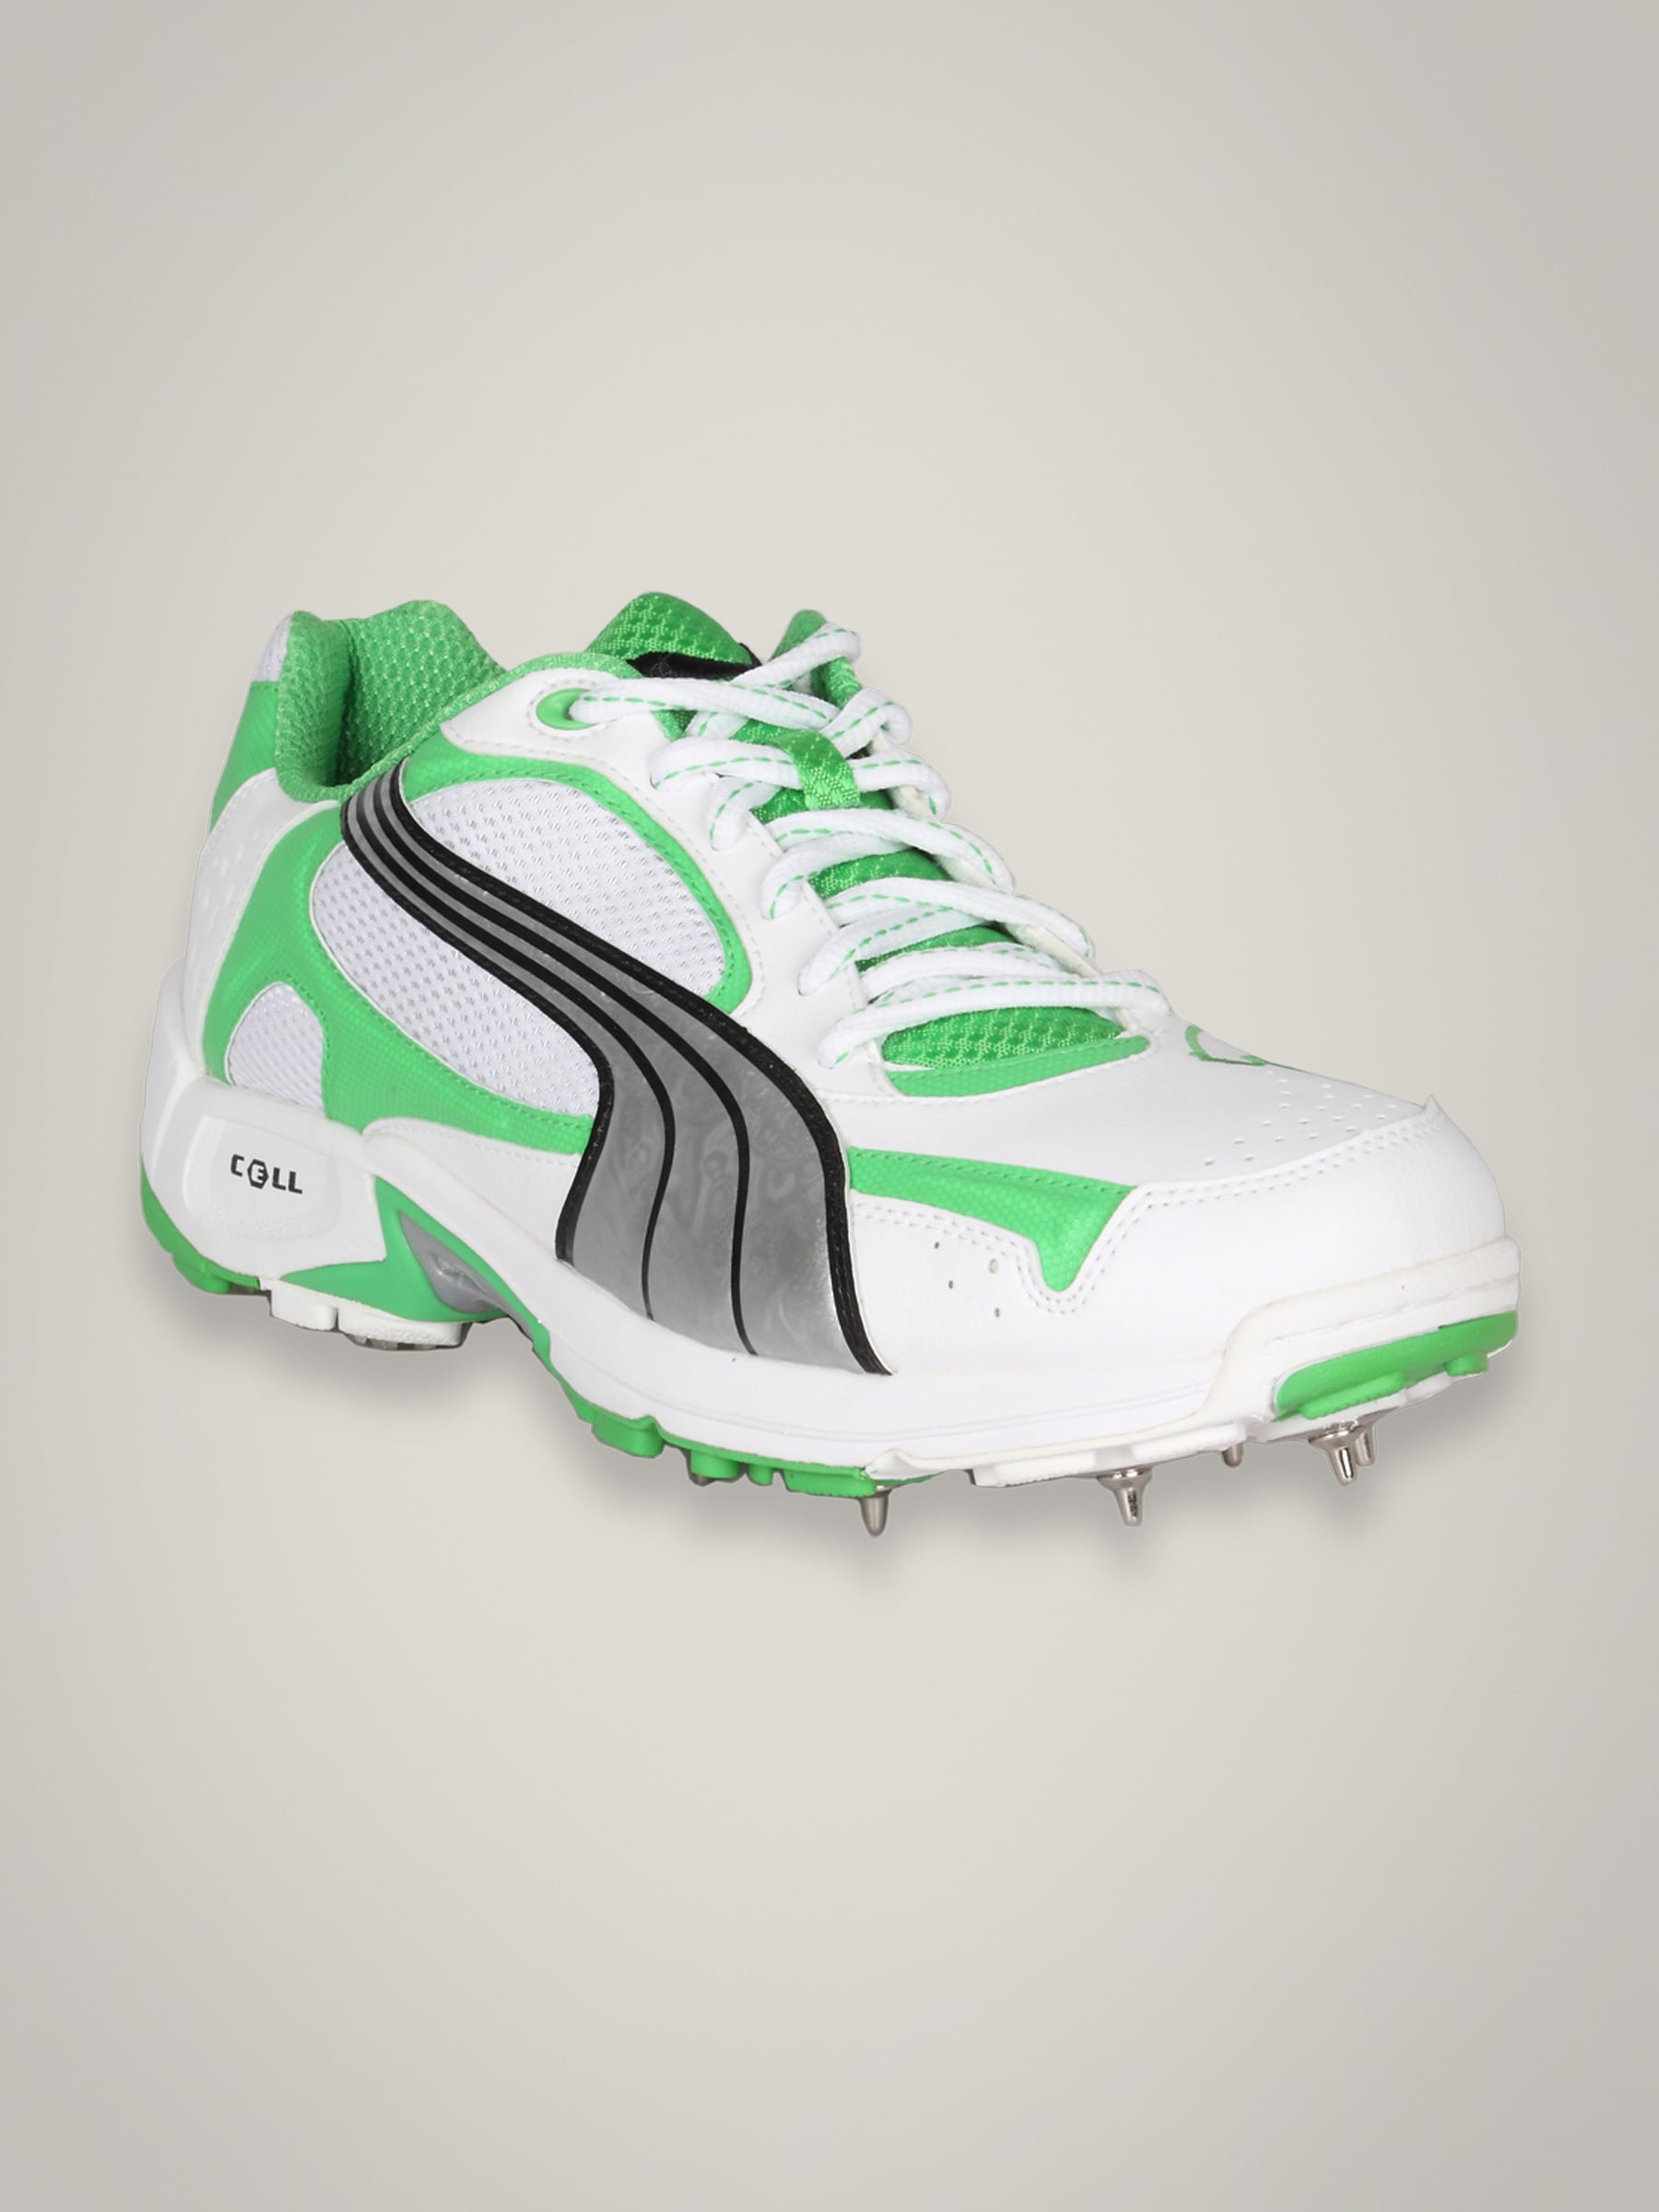 Puma Men's Ballistic Spike White Green Shoe